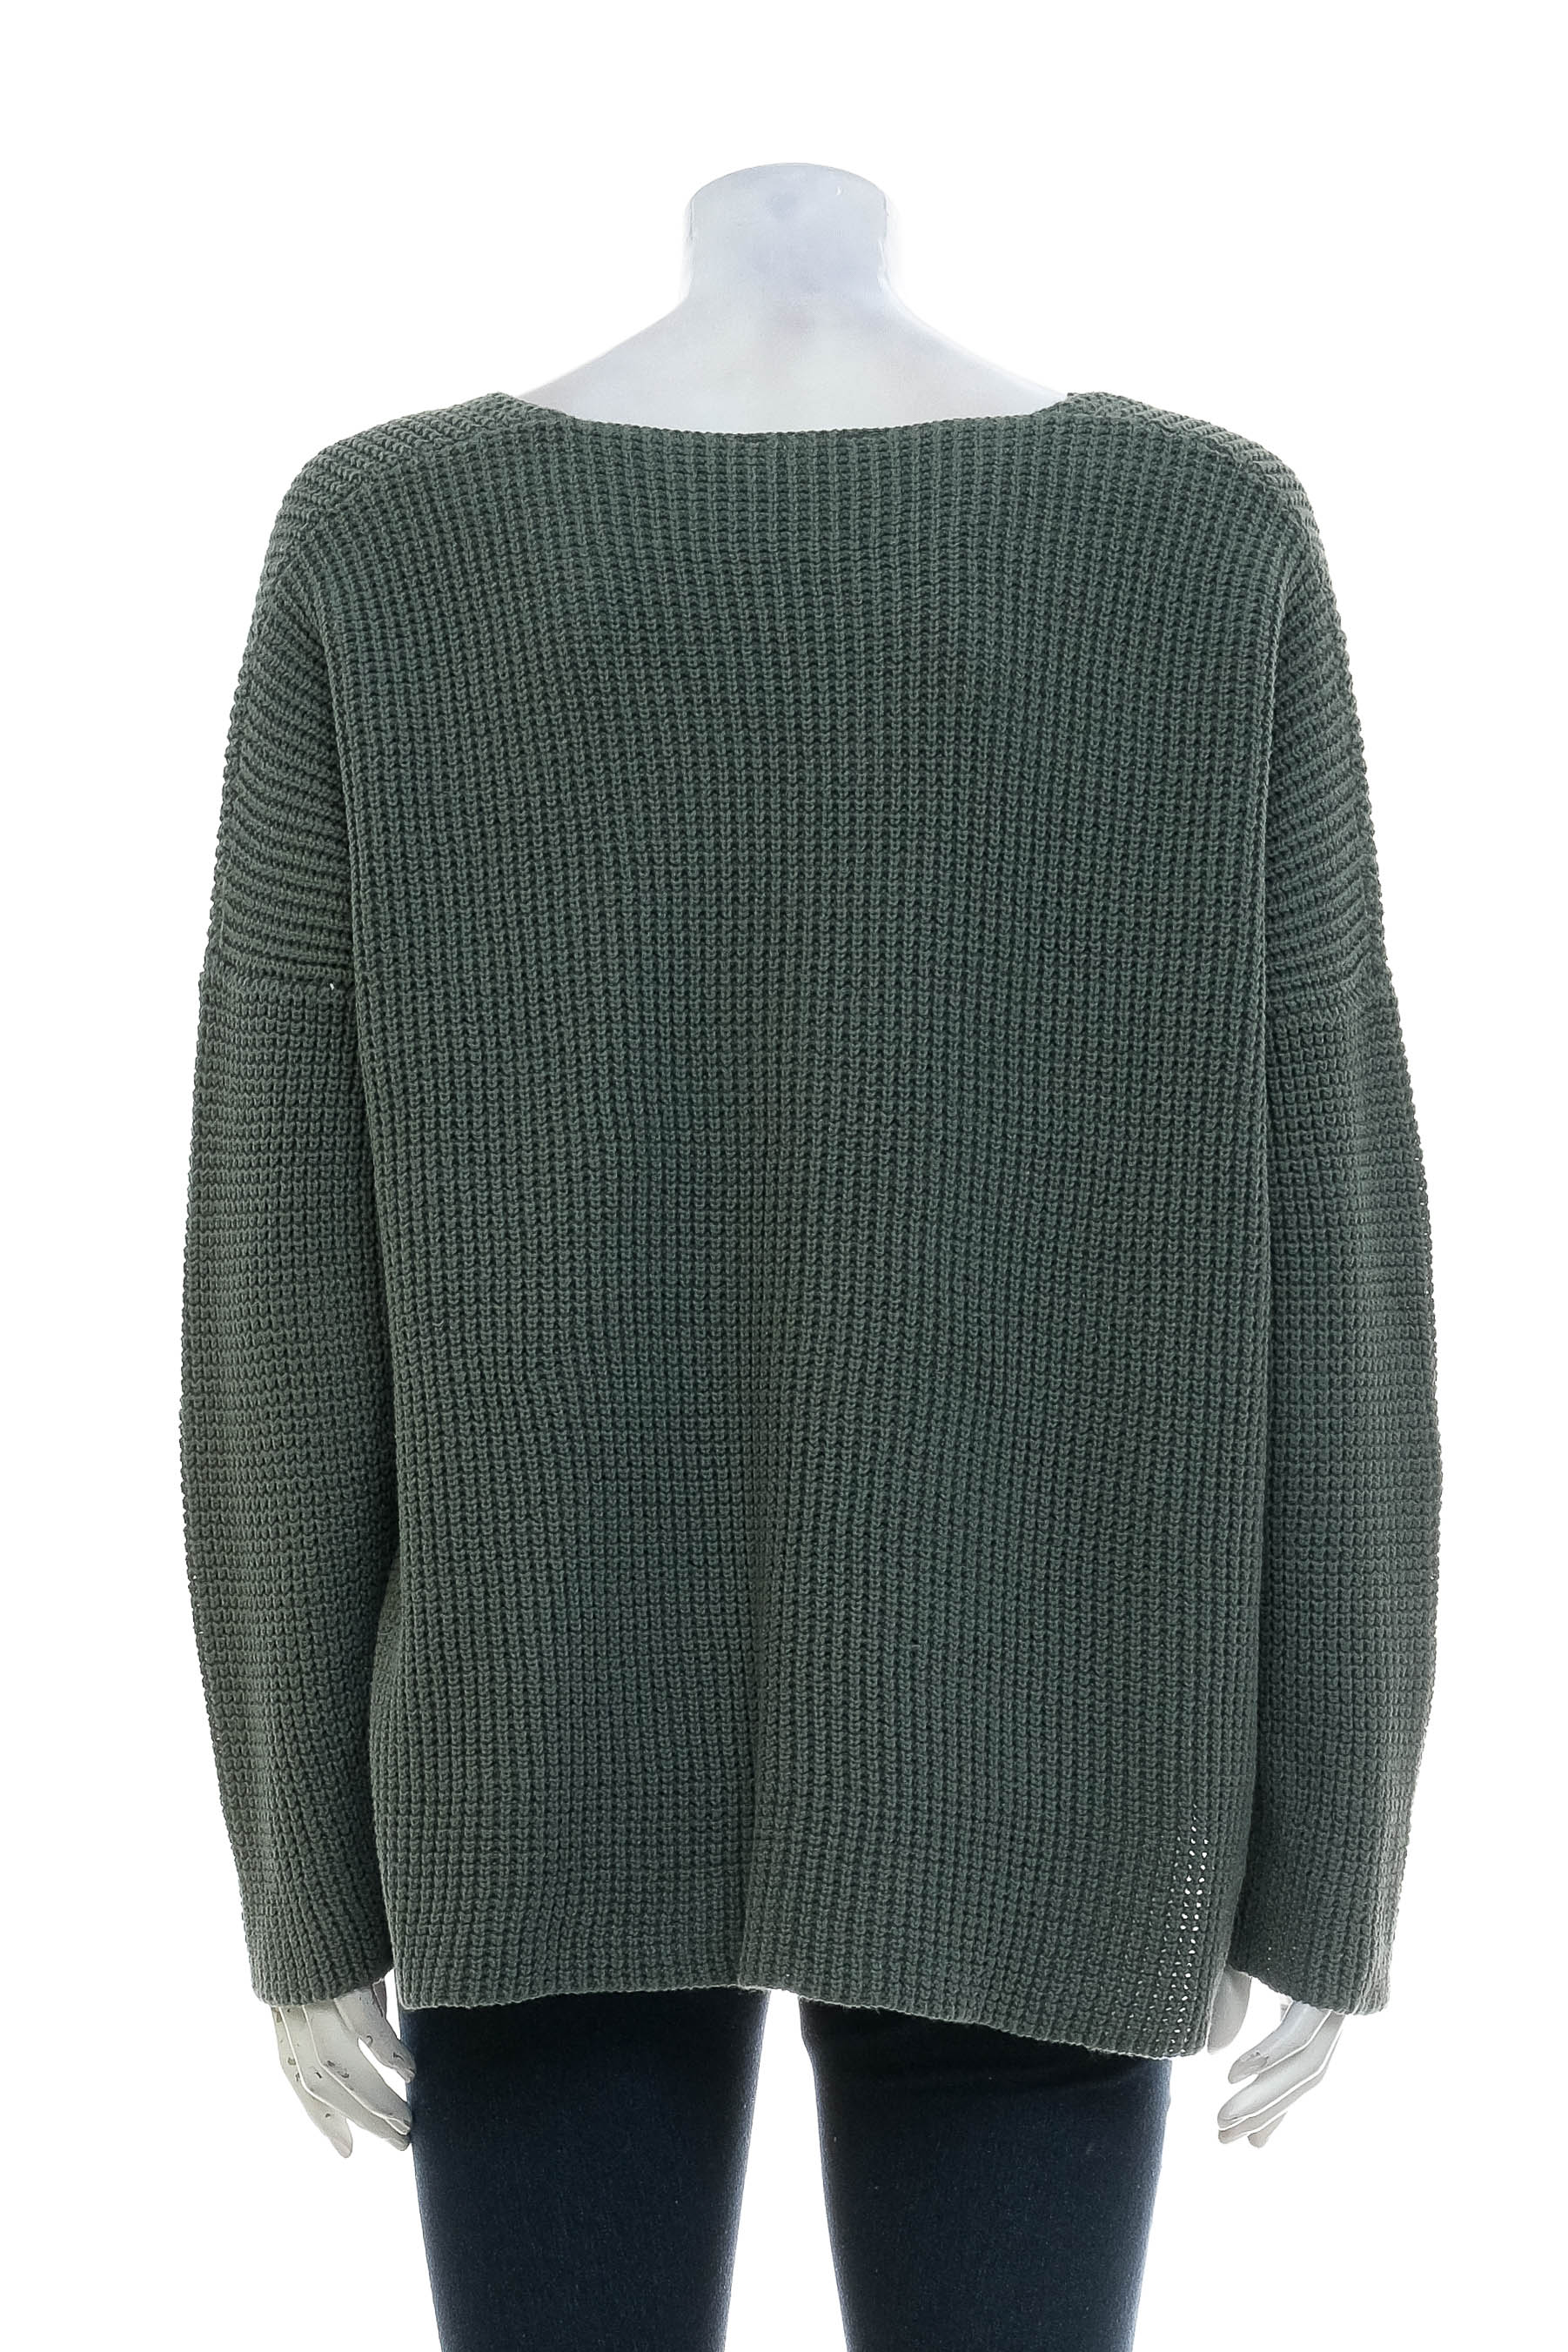 Women's sweater - Sussan - 1